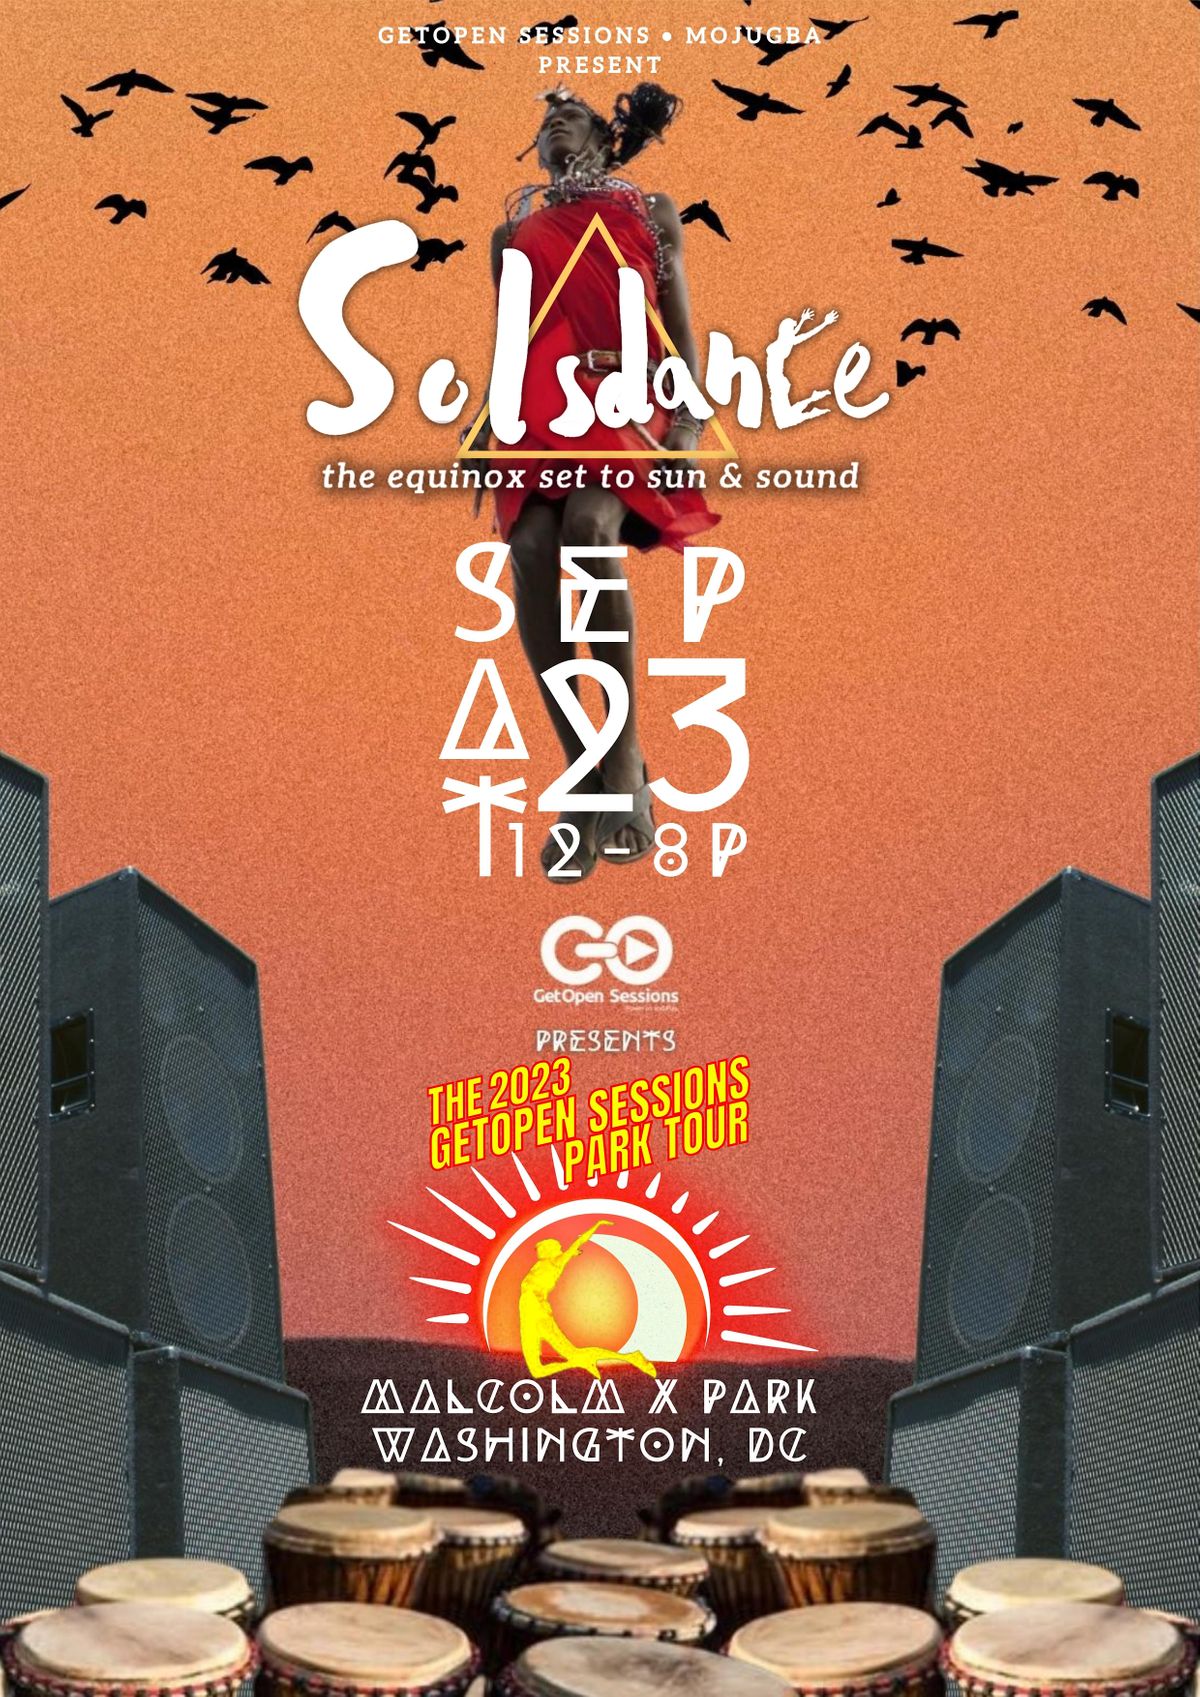 SOLSDANCE: the equinox set to sun & sound